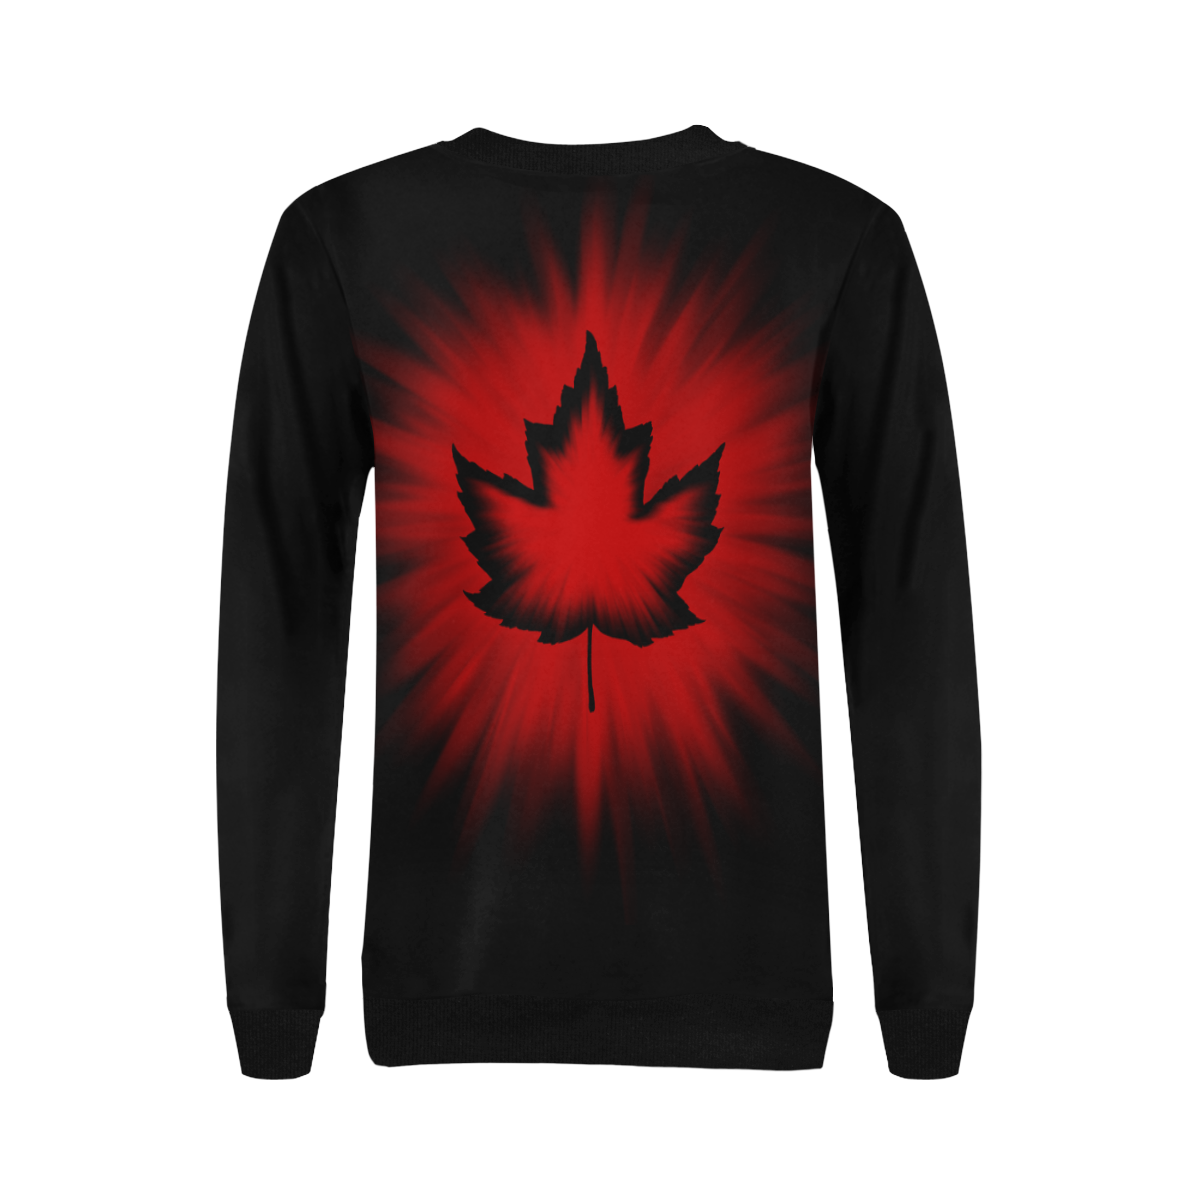 Cool Canada Sweatshirts New Women's Rib Cuff Crew Neck Sweatshirt (Model H34)